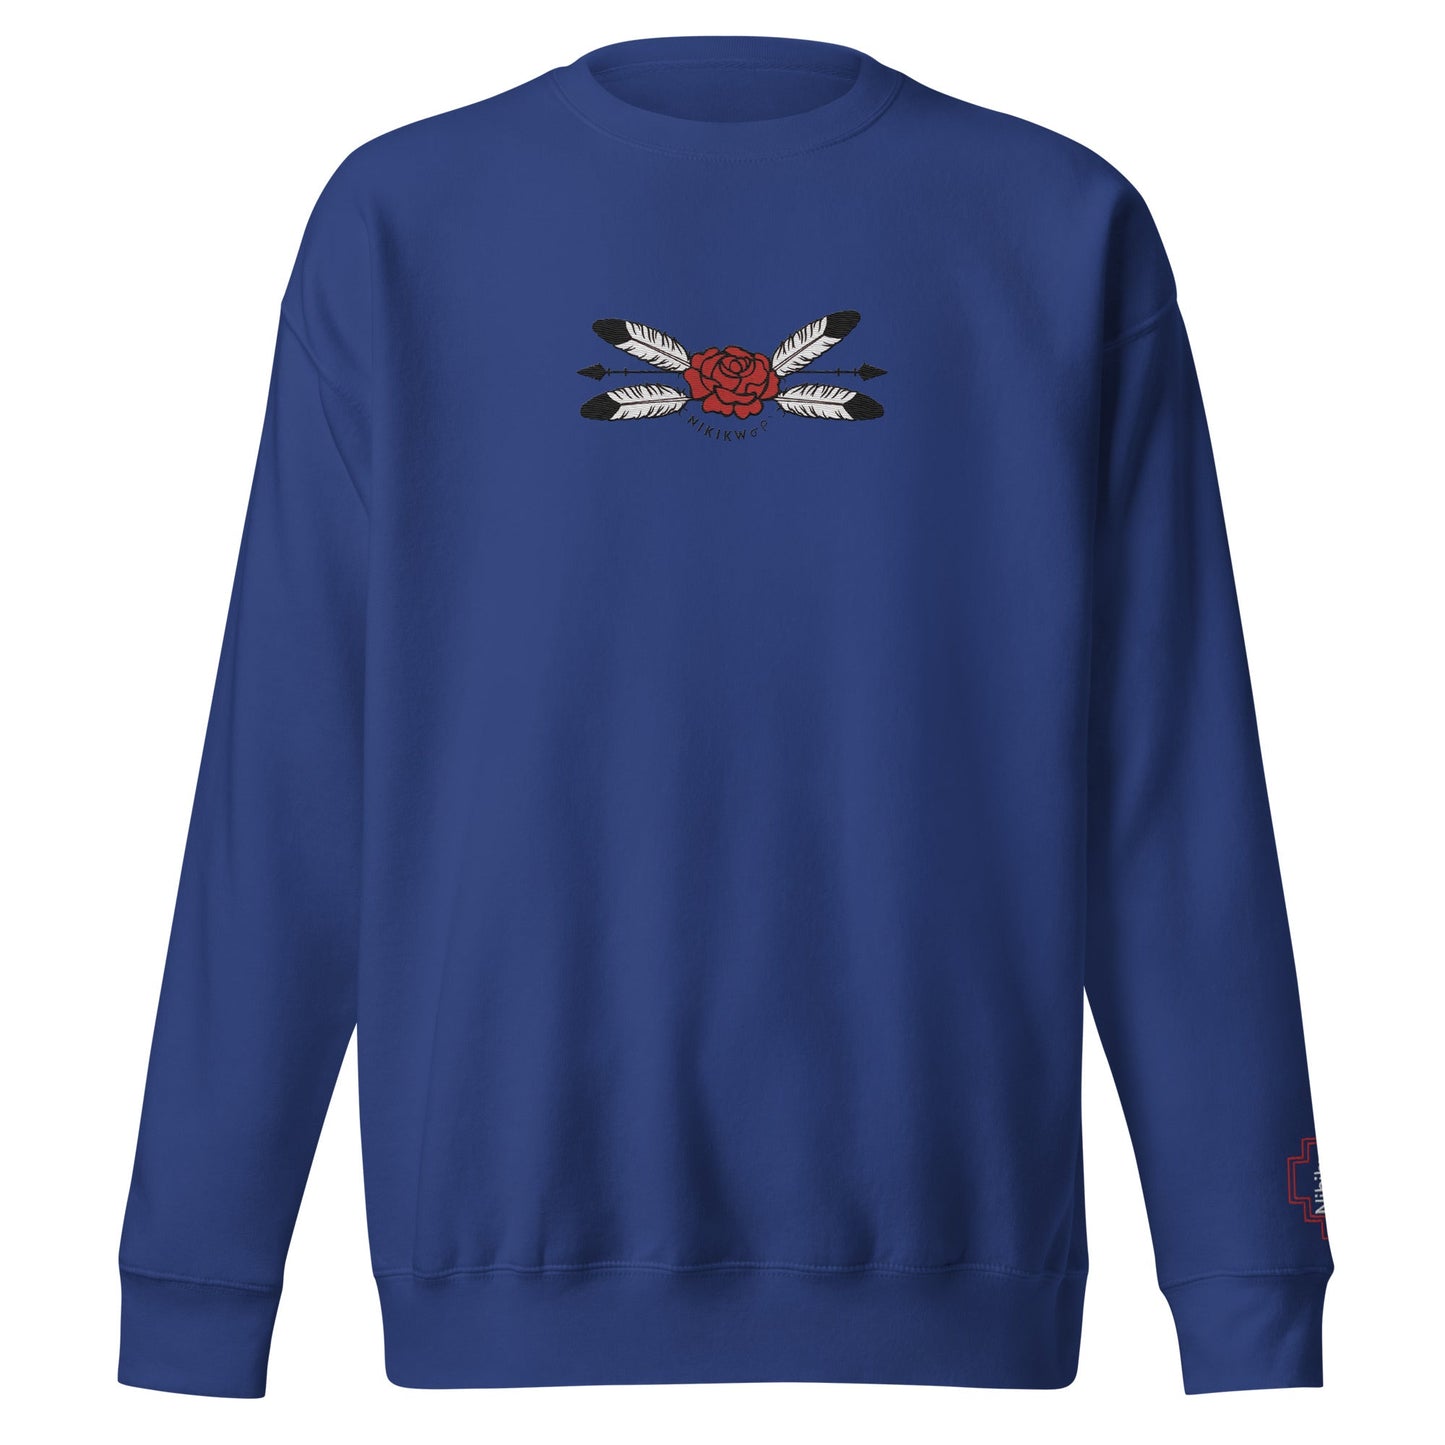 Unisex Rose Embroidered Premium Sweatshirt - Nikikw Designs